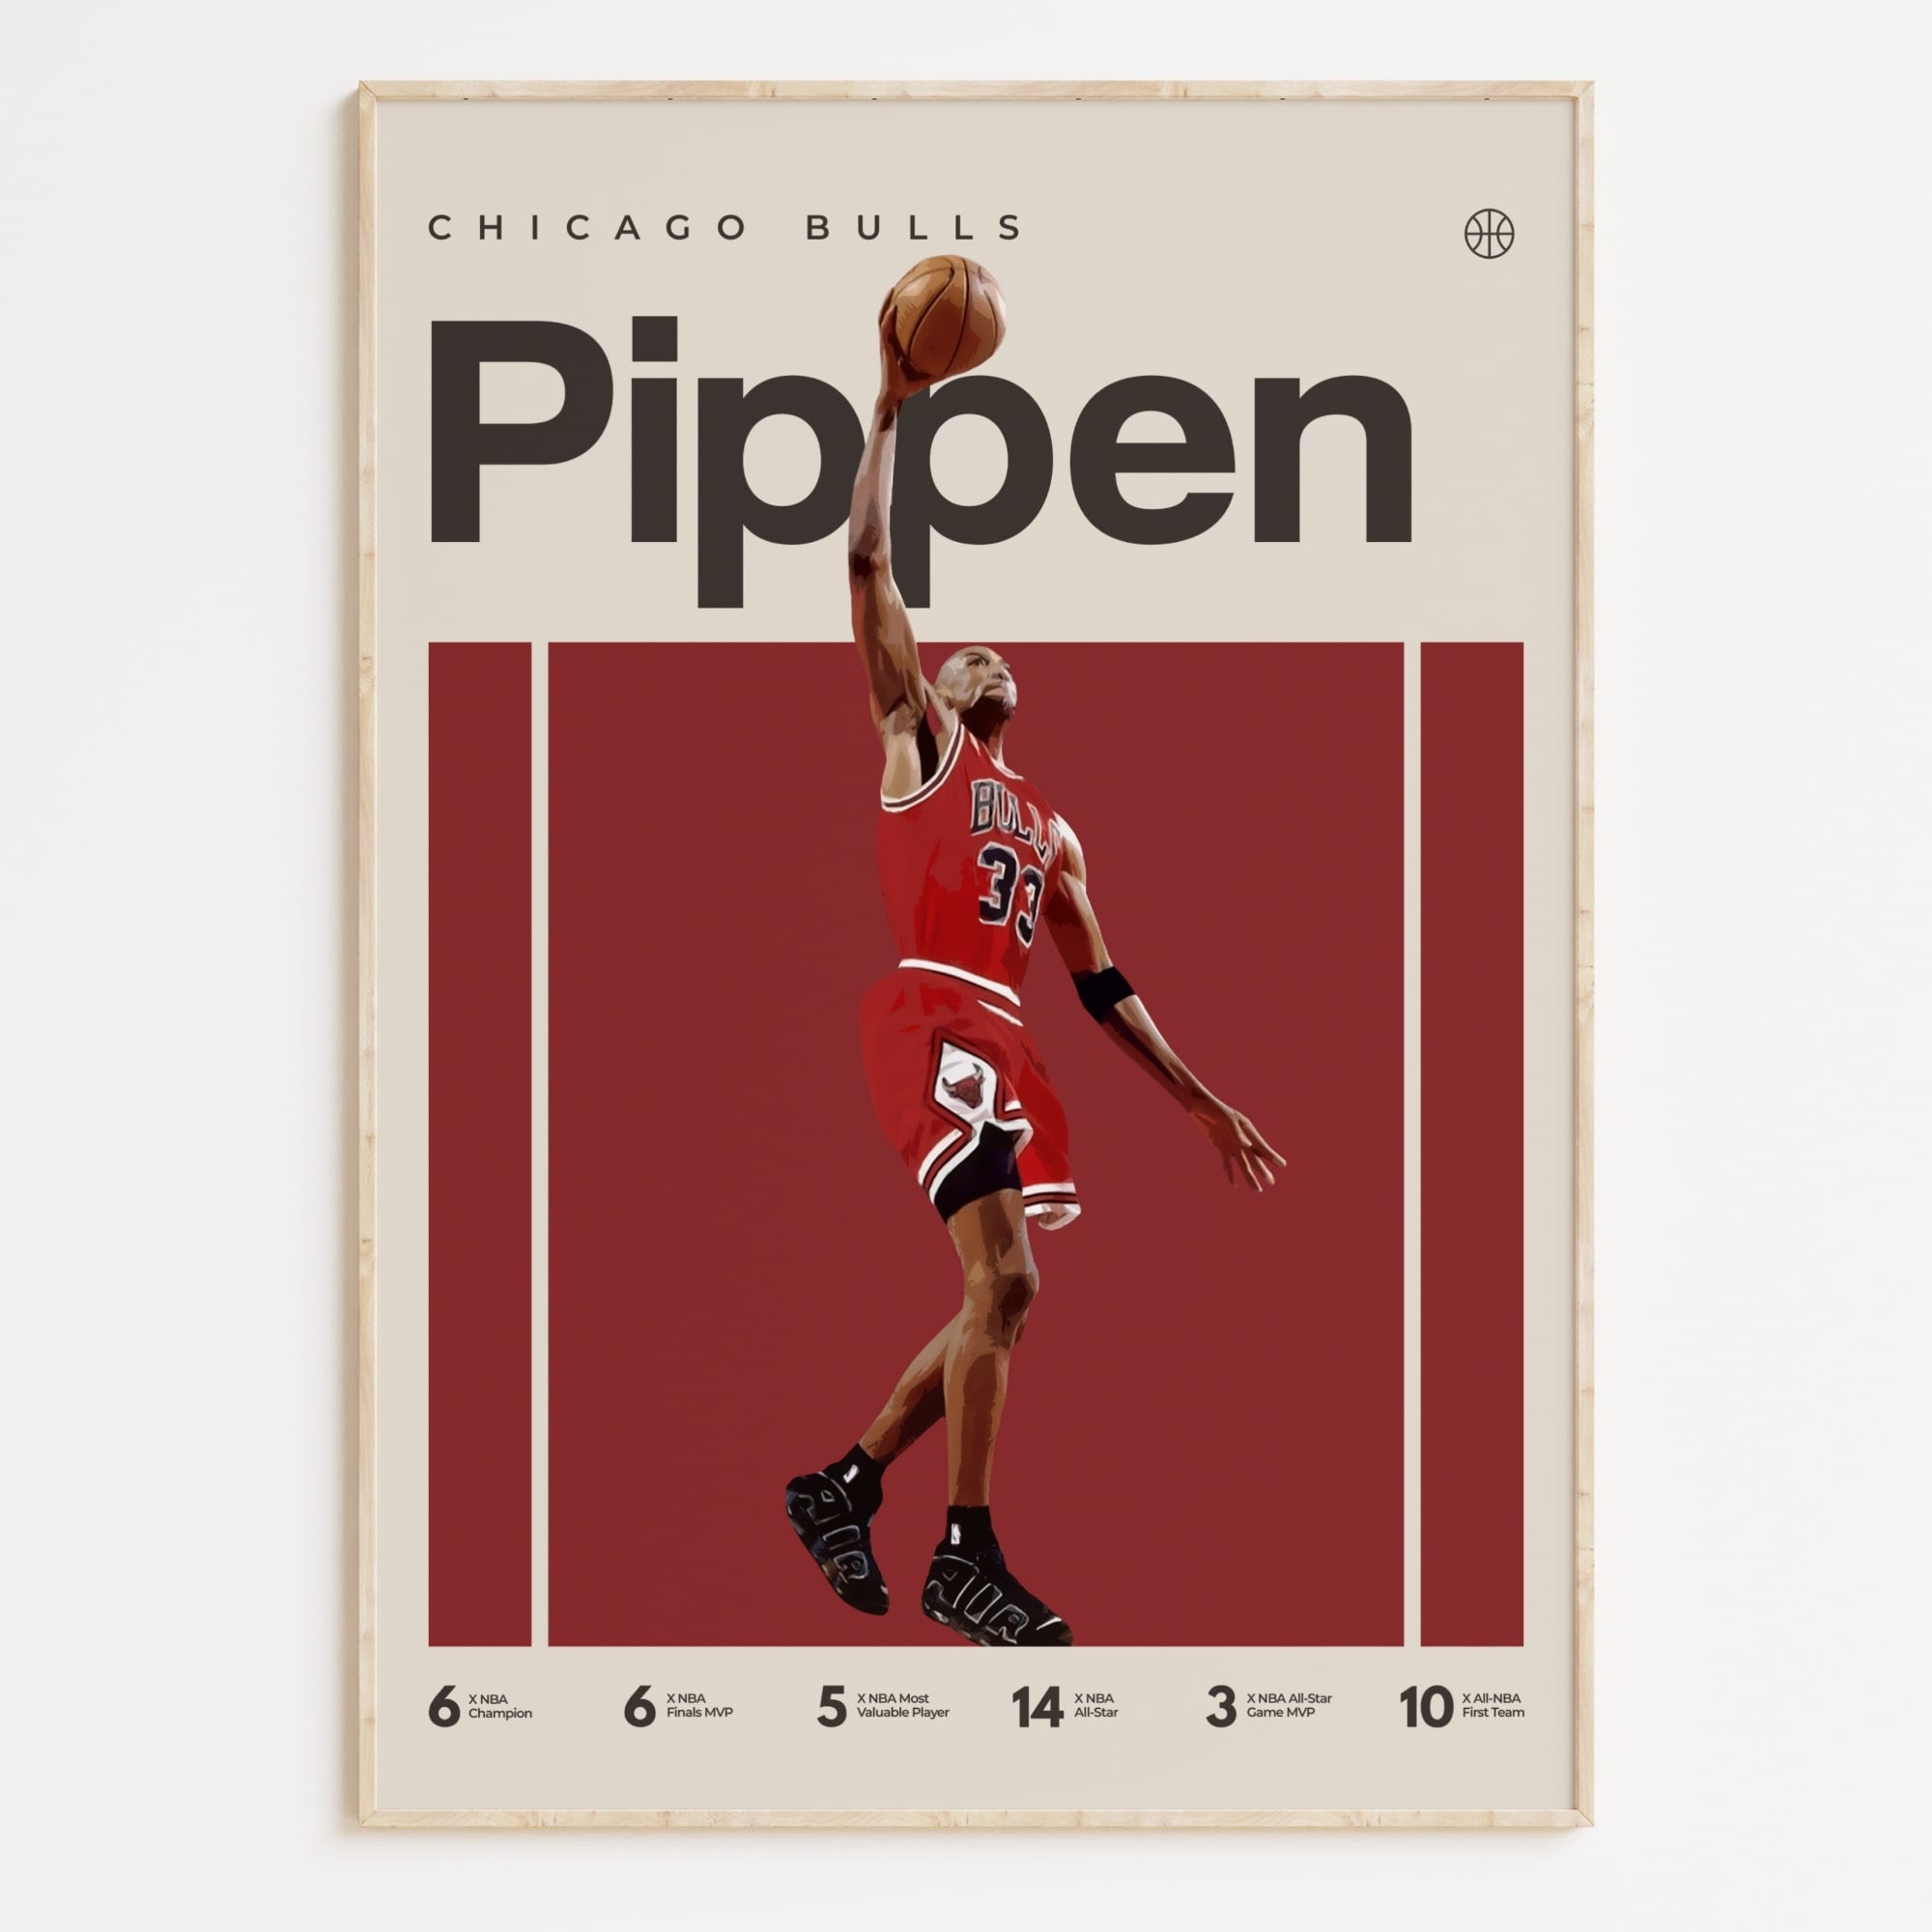 Scottie Pippen poster